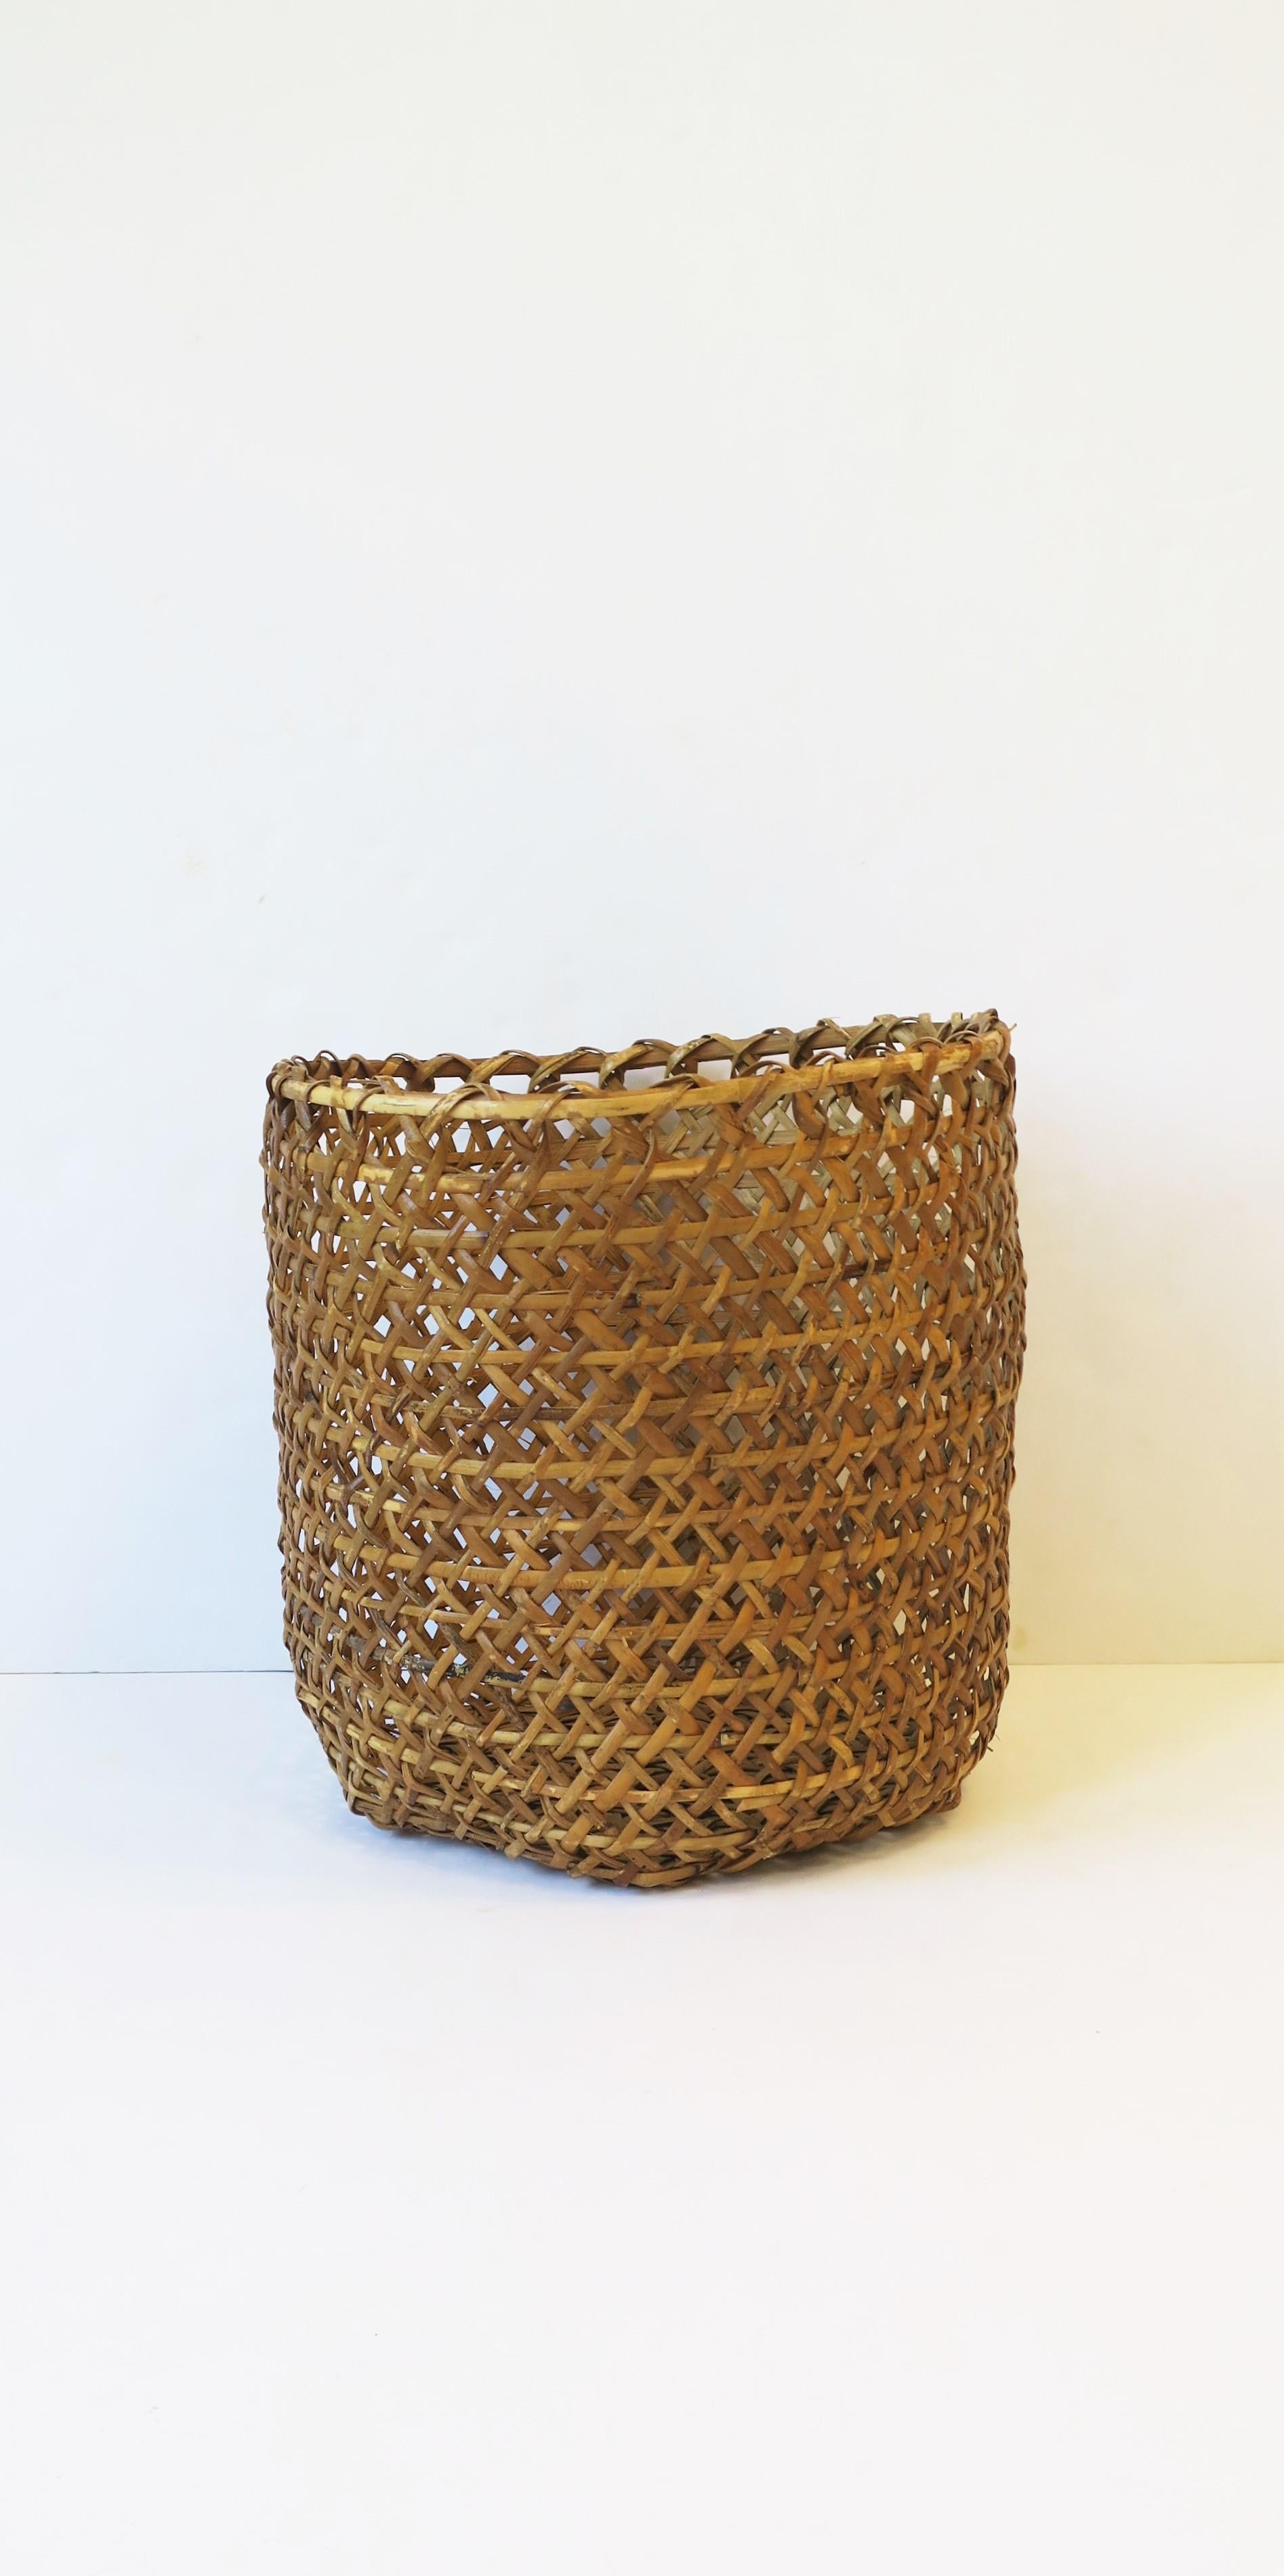 Hand-Woven Vintage Wicker Basket Cachepot or Wastebasket Trash Can